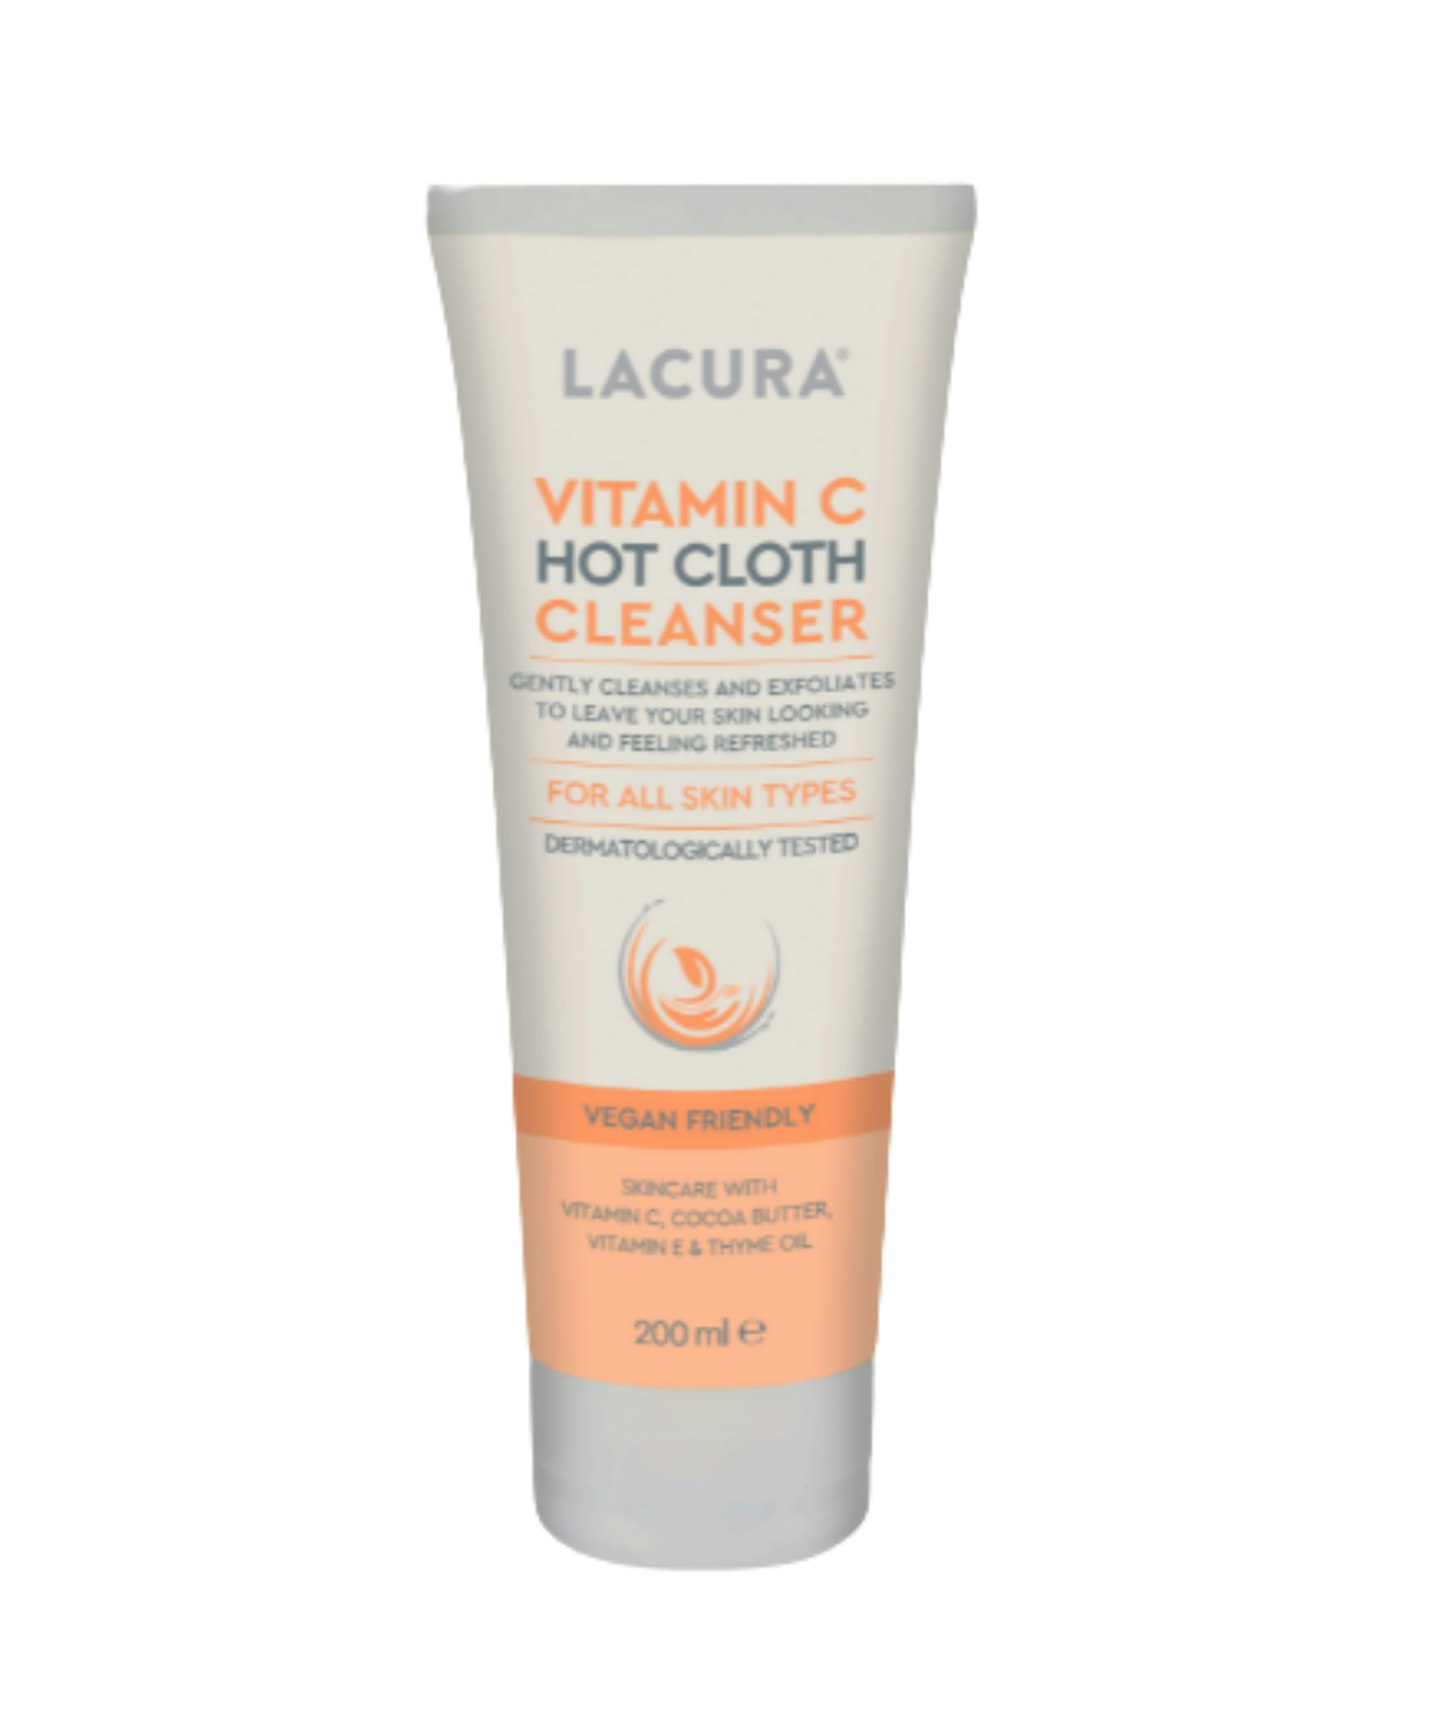 Lacura Vitamin C Hot Cloth Cleanser